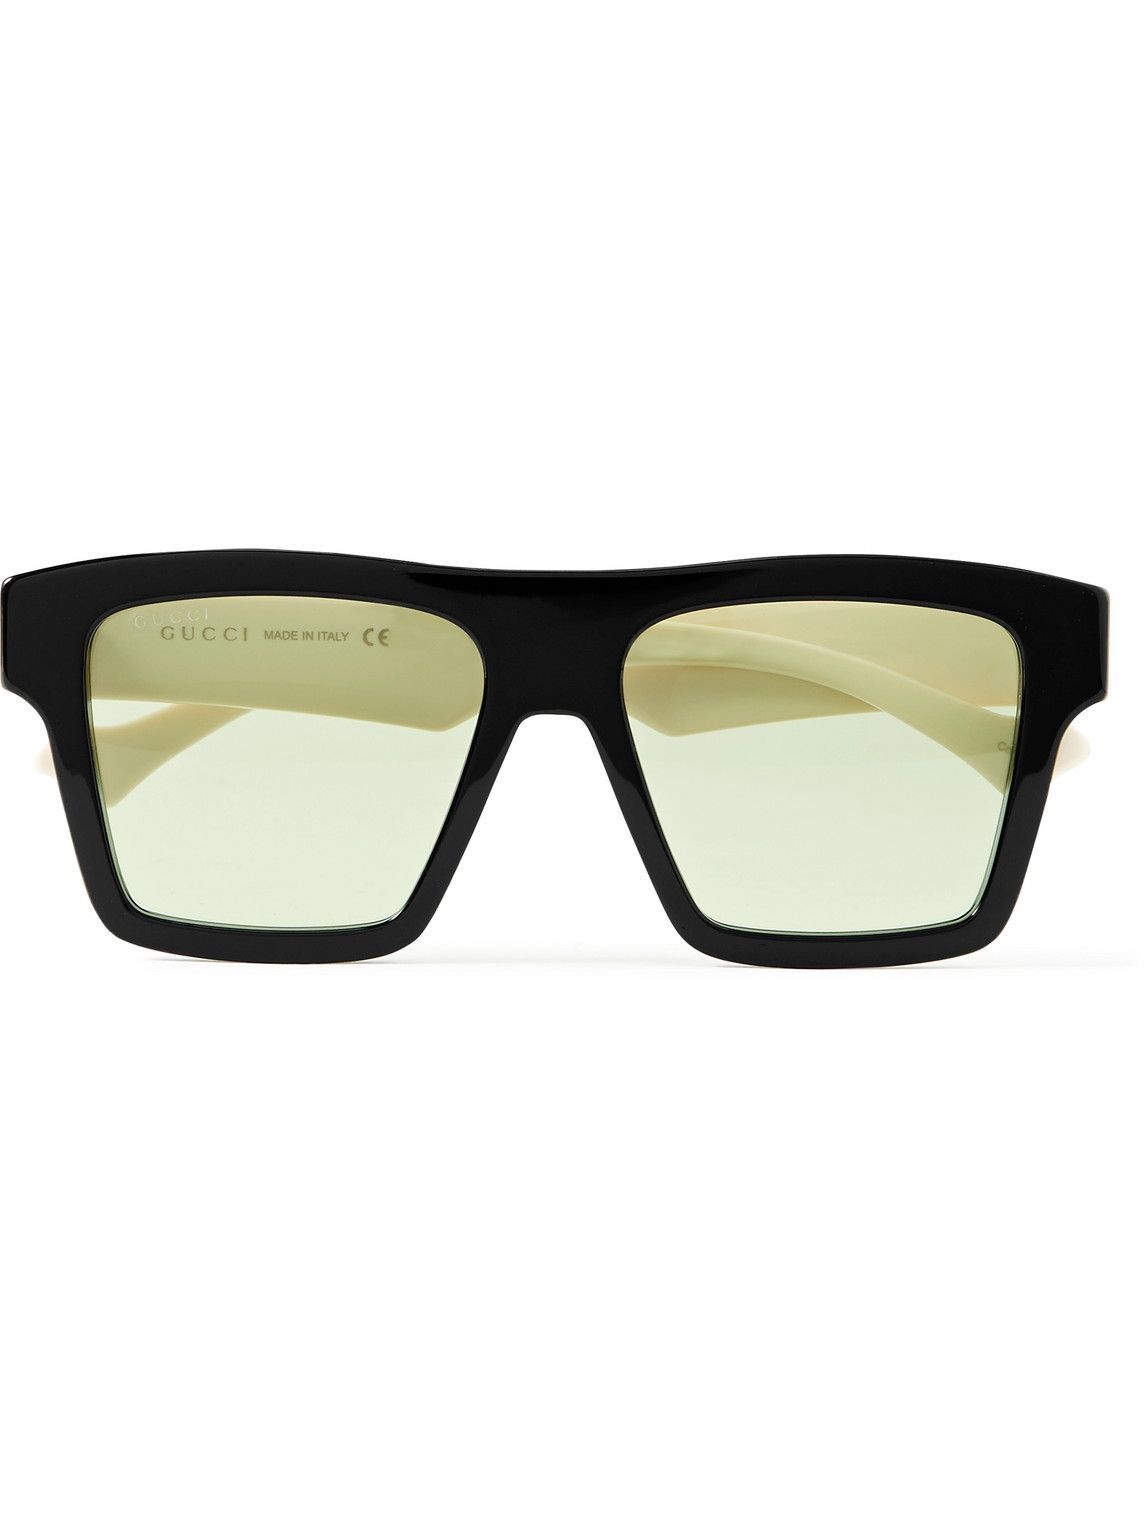 Gucci Eyewear - Square-Frame Two-Tone Acetate Sunglasses Gucci